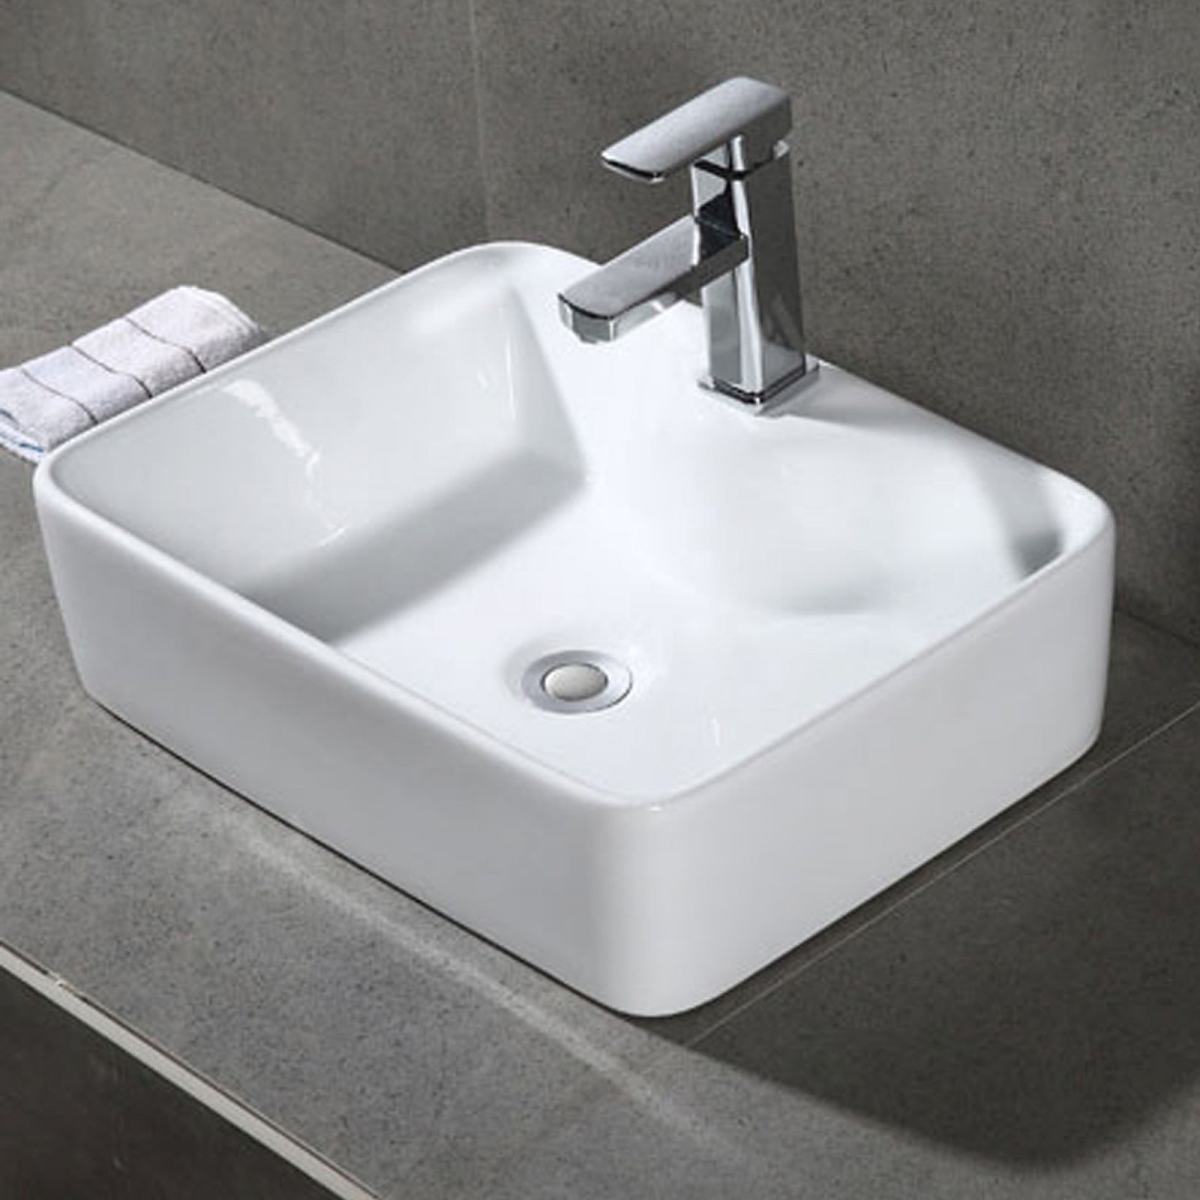 Bsk5400a Porcelain Ceramic Vitreous Rectangular 19 Inch Bathroom Vessel Sink